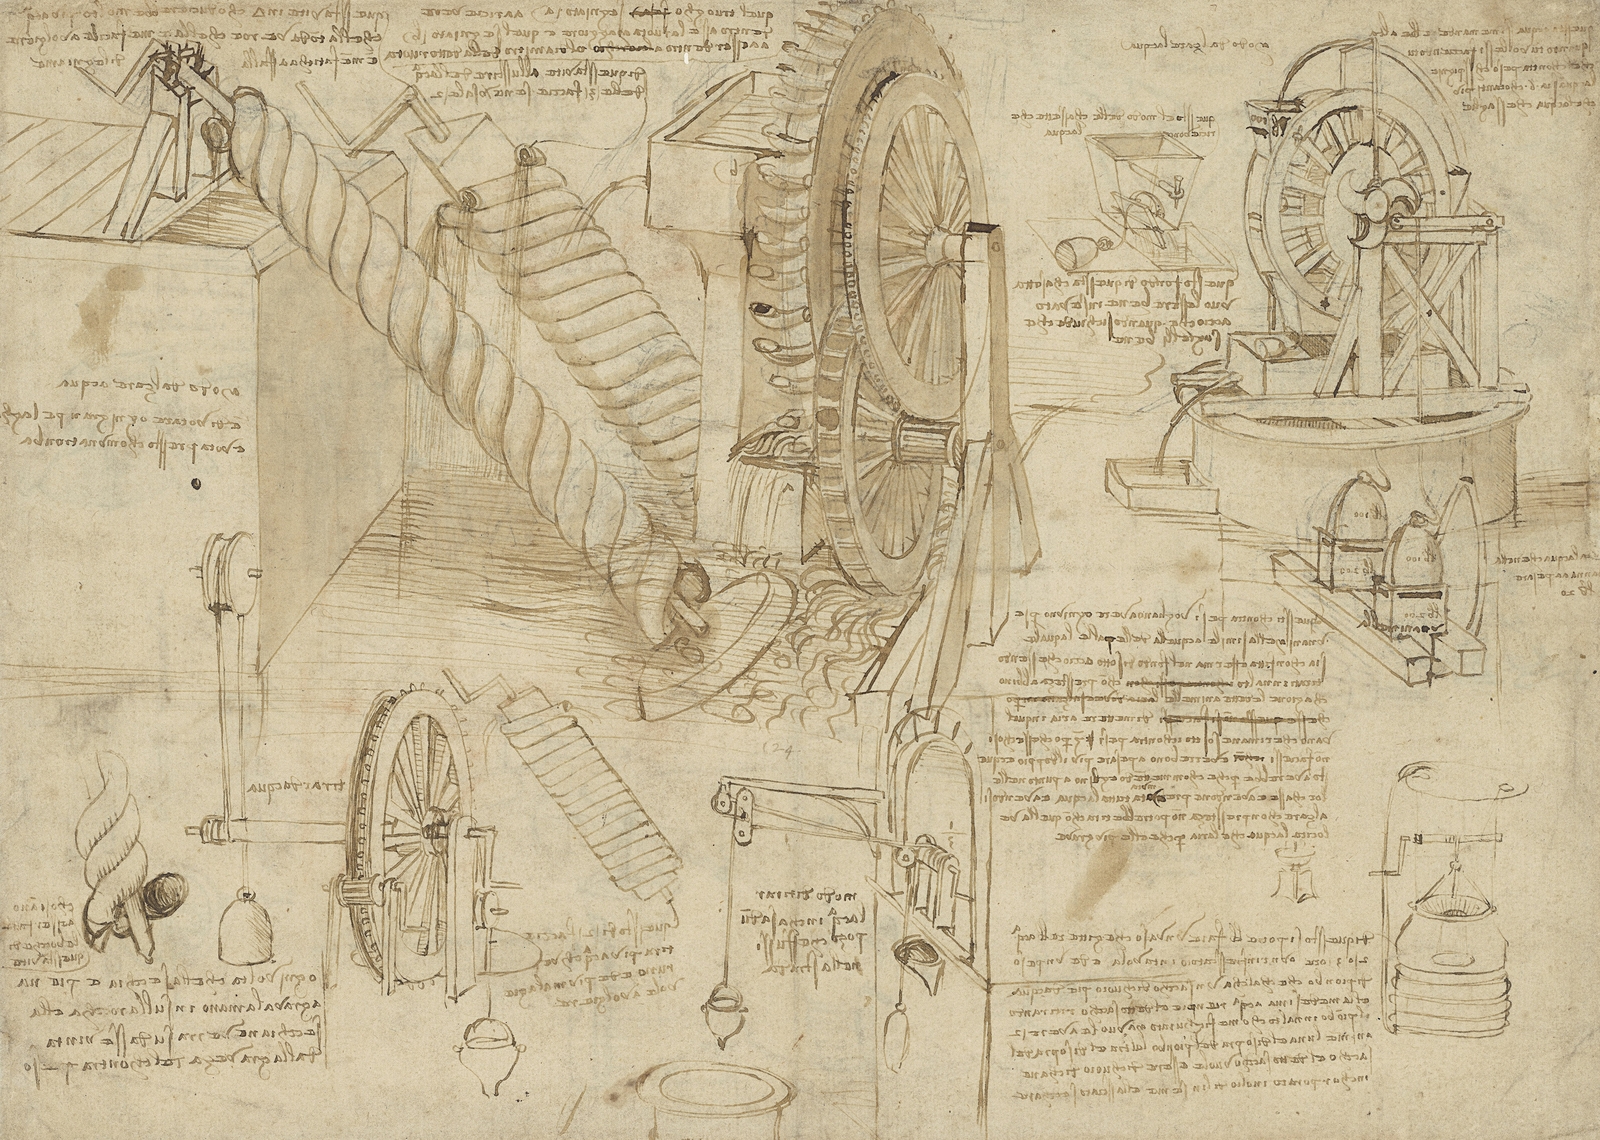 Leonardo+da+Vinci-1452-1519 (851).jpg